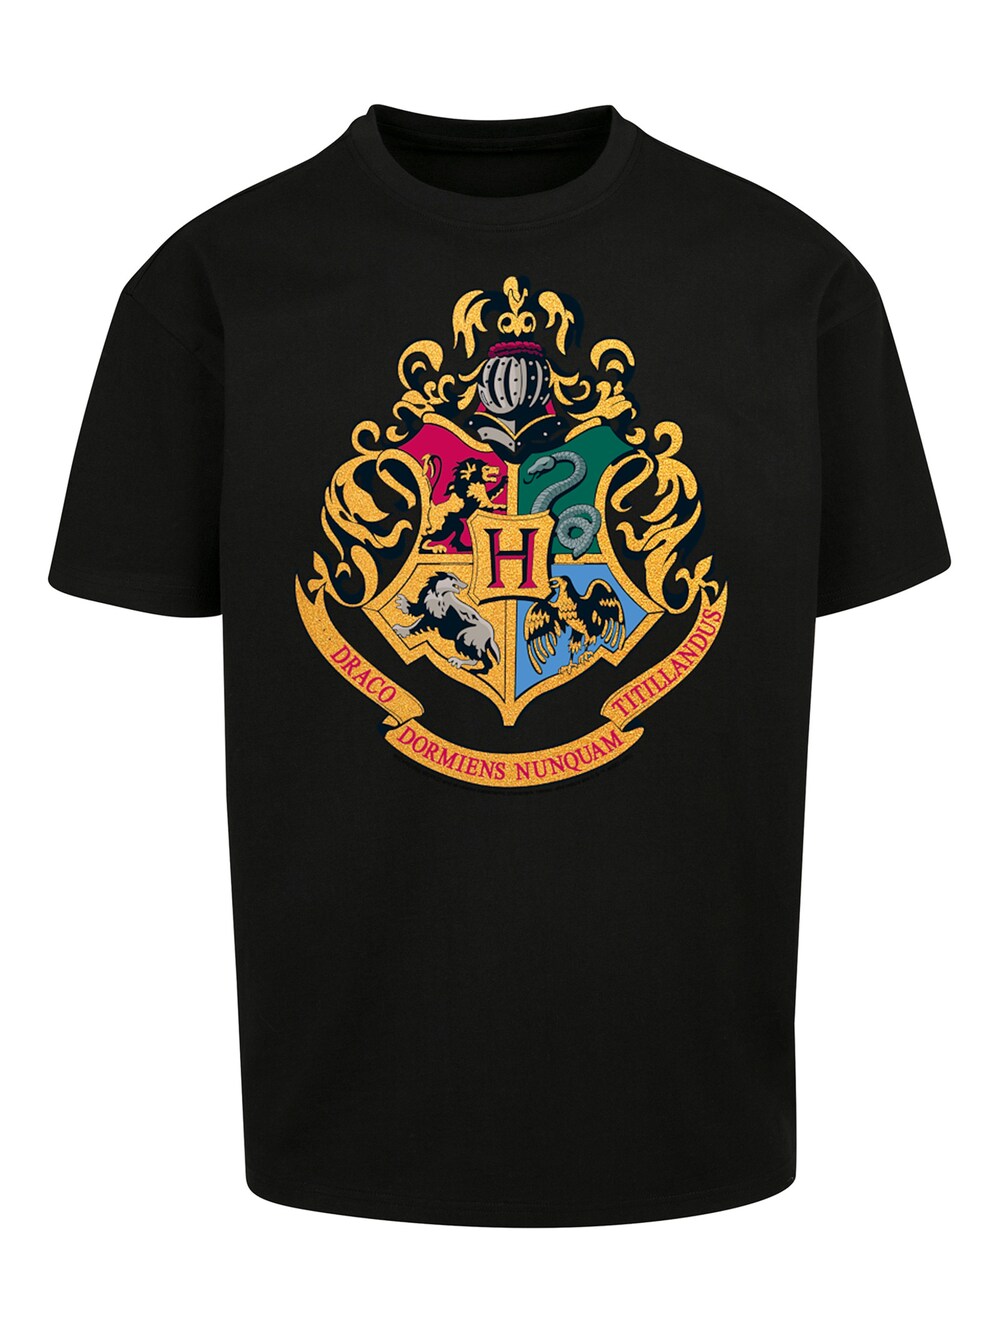 Футболка F4Nt4Stic Harry Potter Hogwarts Crest Gold, черный pyramida брелок harry potter hogwarts crest